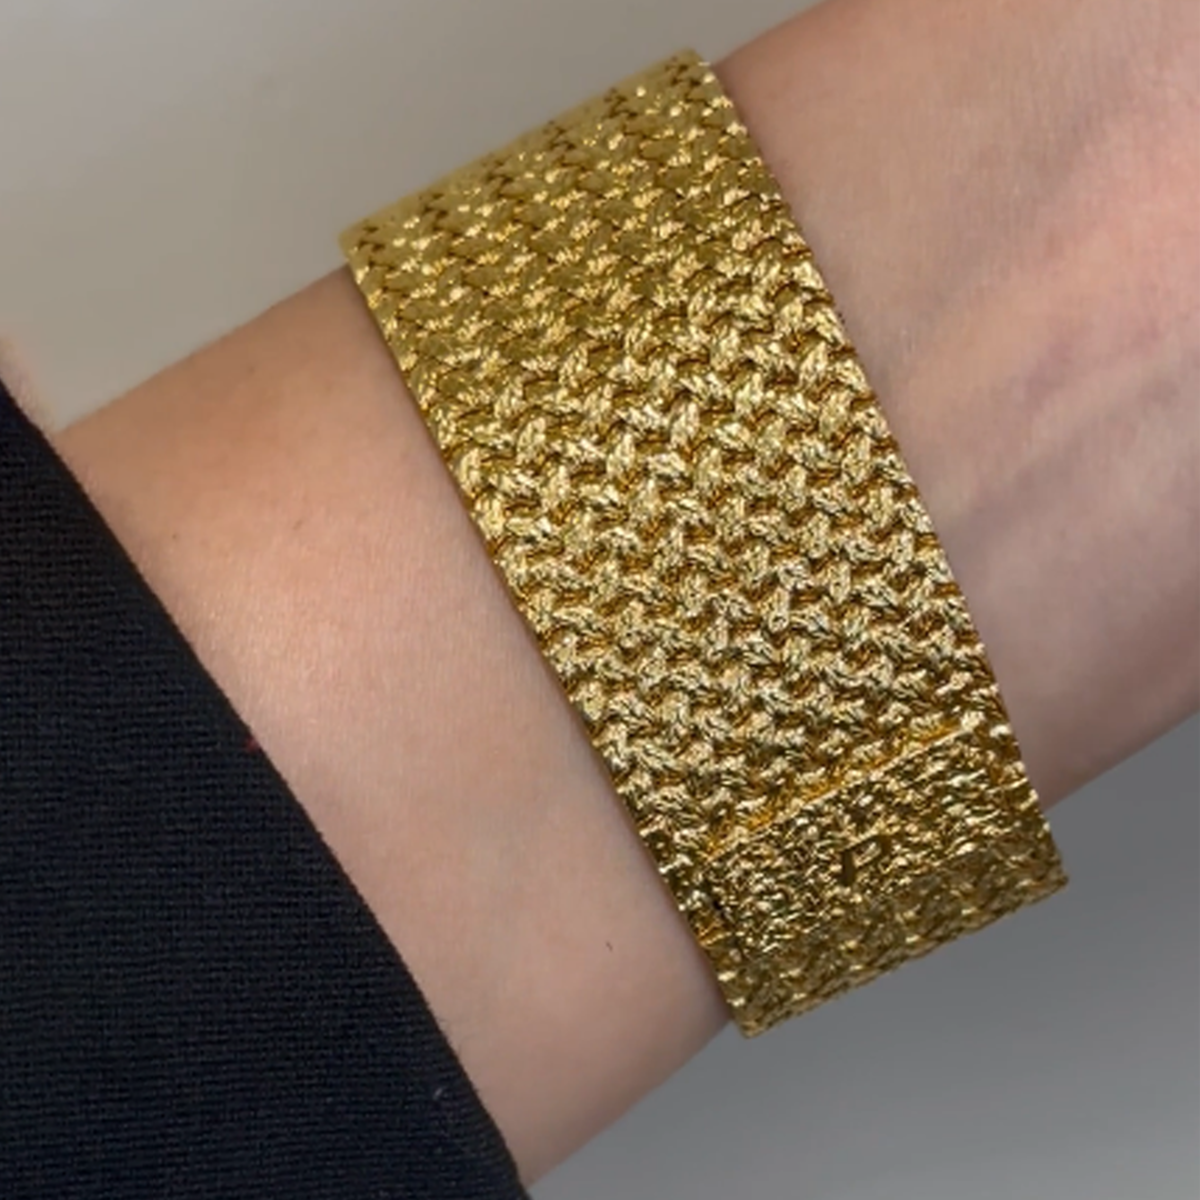 Piaget 1980s 18KT Yellow Gold Watch Bracelet on wrist